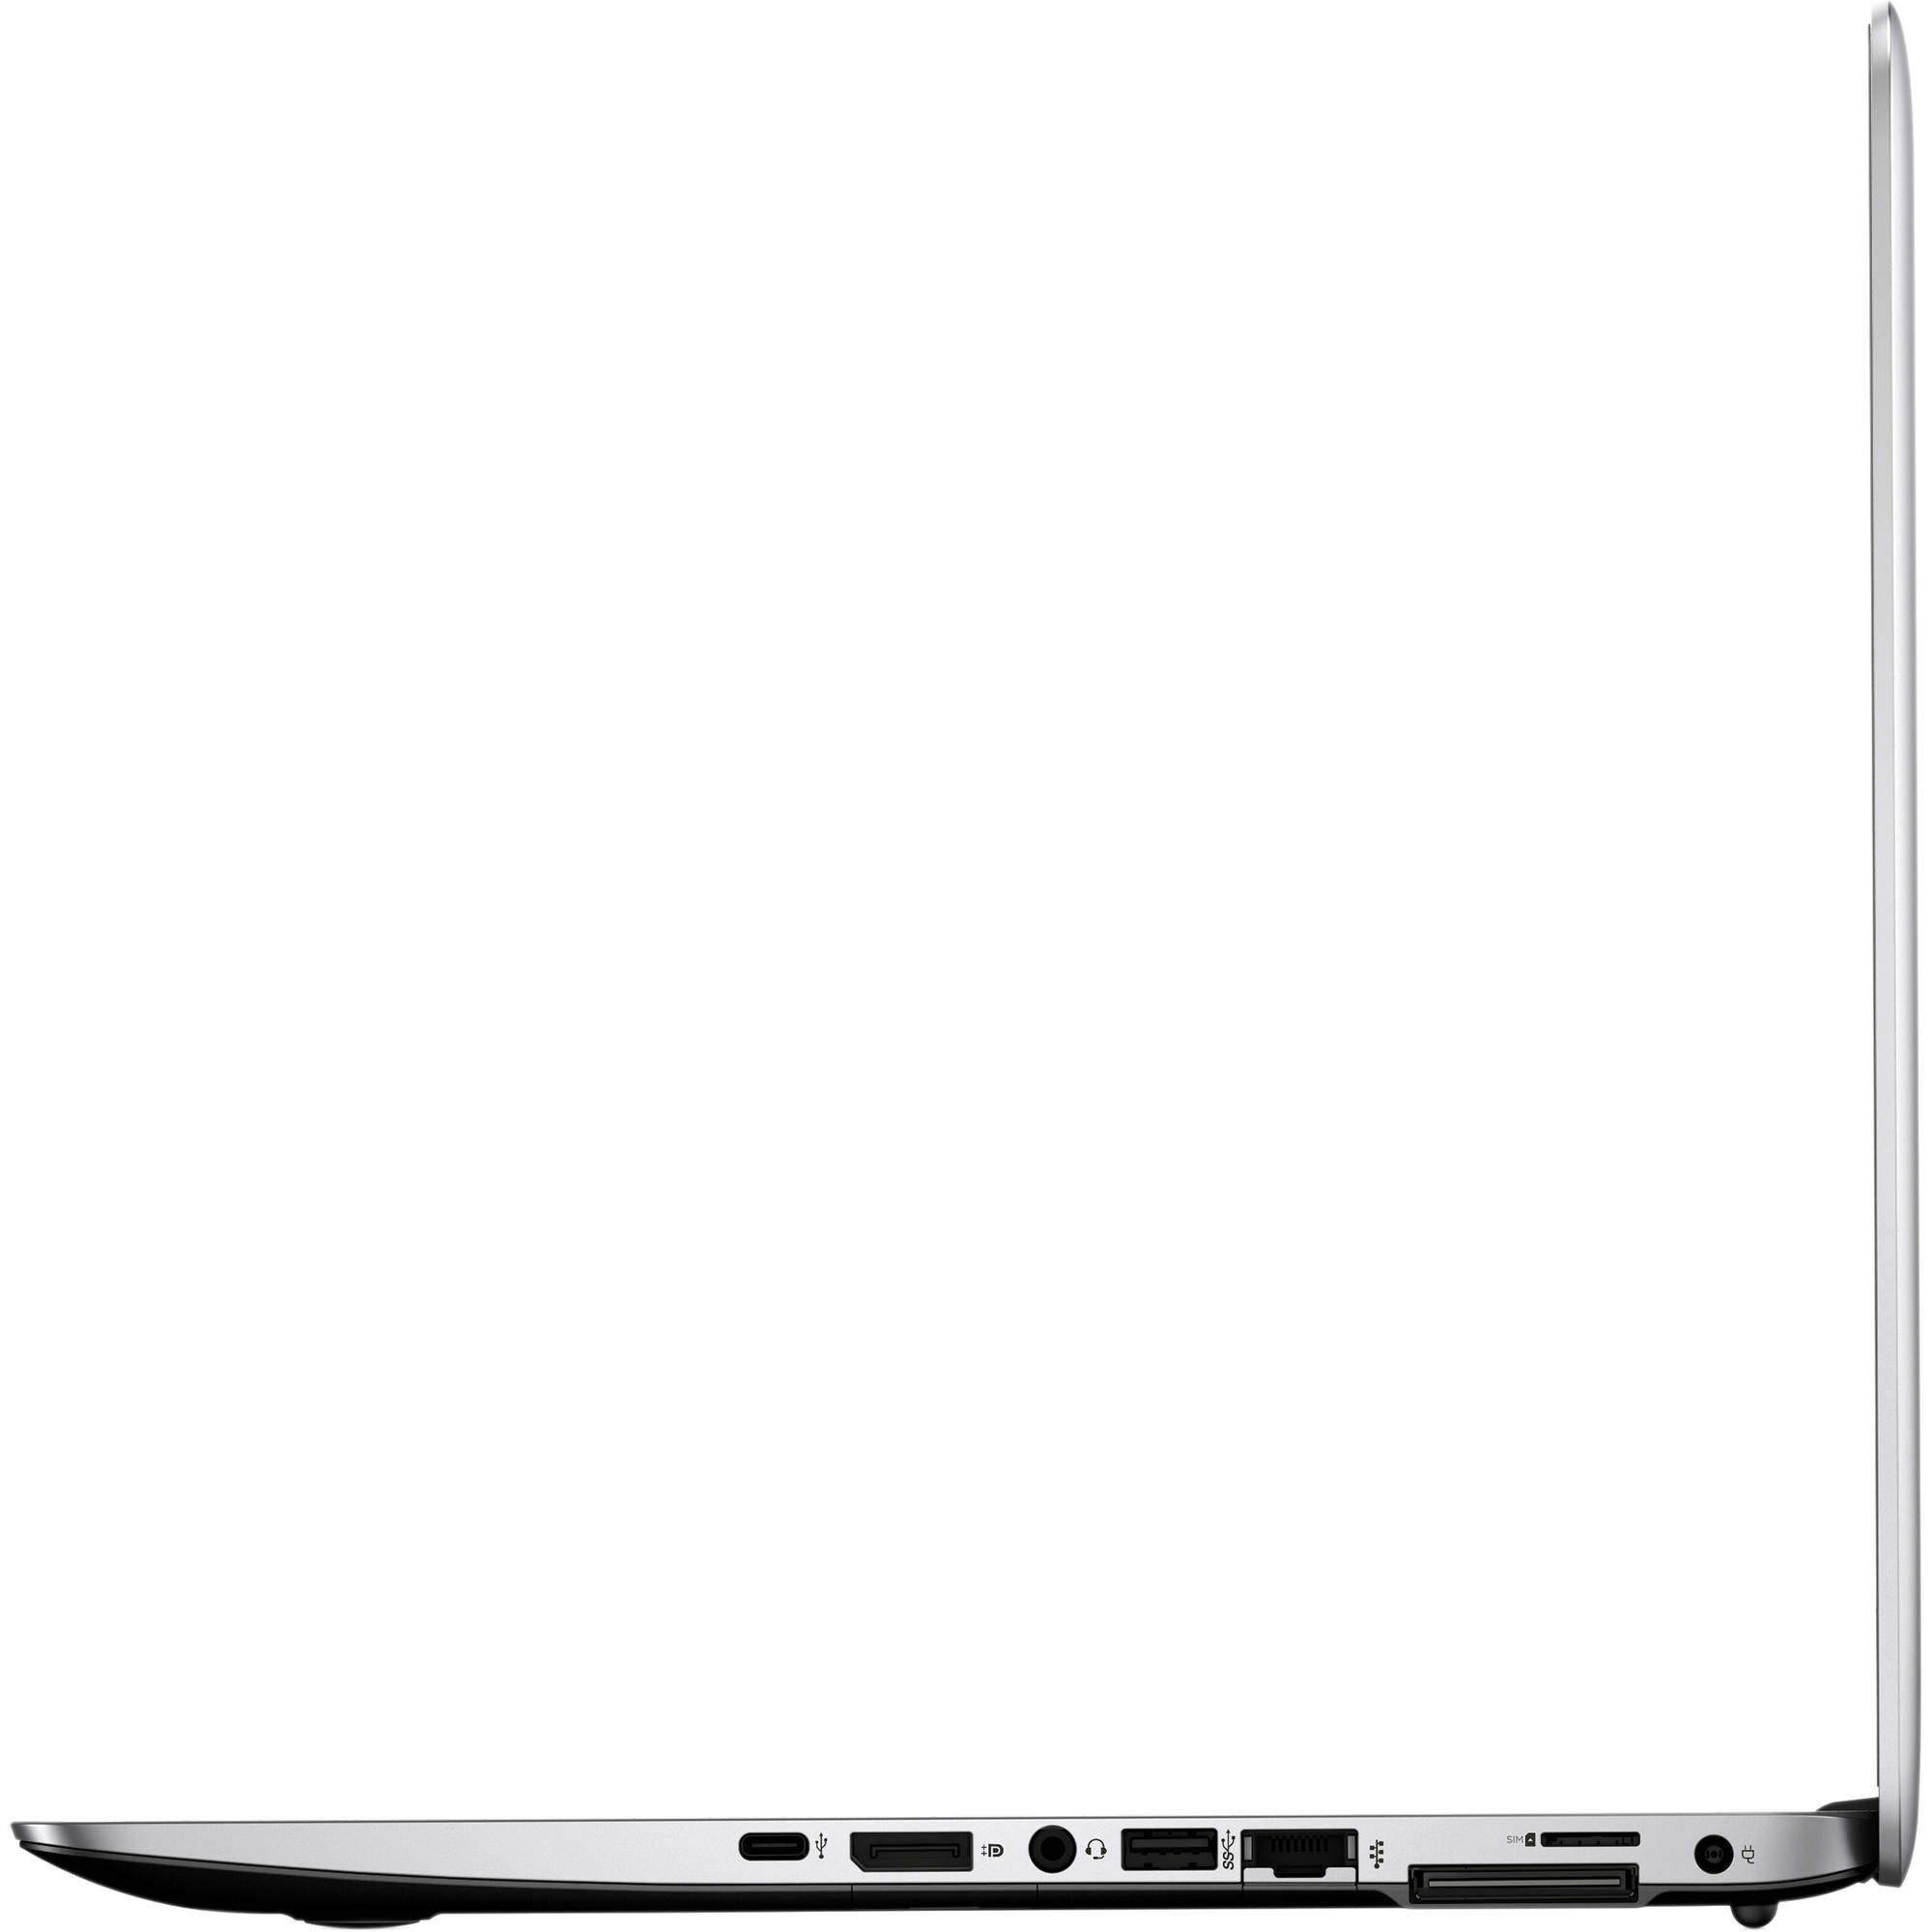 HP EliteBook 850 G4 Notebook PC (ENERGY STAR) (1BS52UT) 15.6in 256GB/8GB/8GB 2.7GHz Windows 10 Pro 64 Intel HD Graphics 620 - image 3 of 4